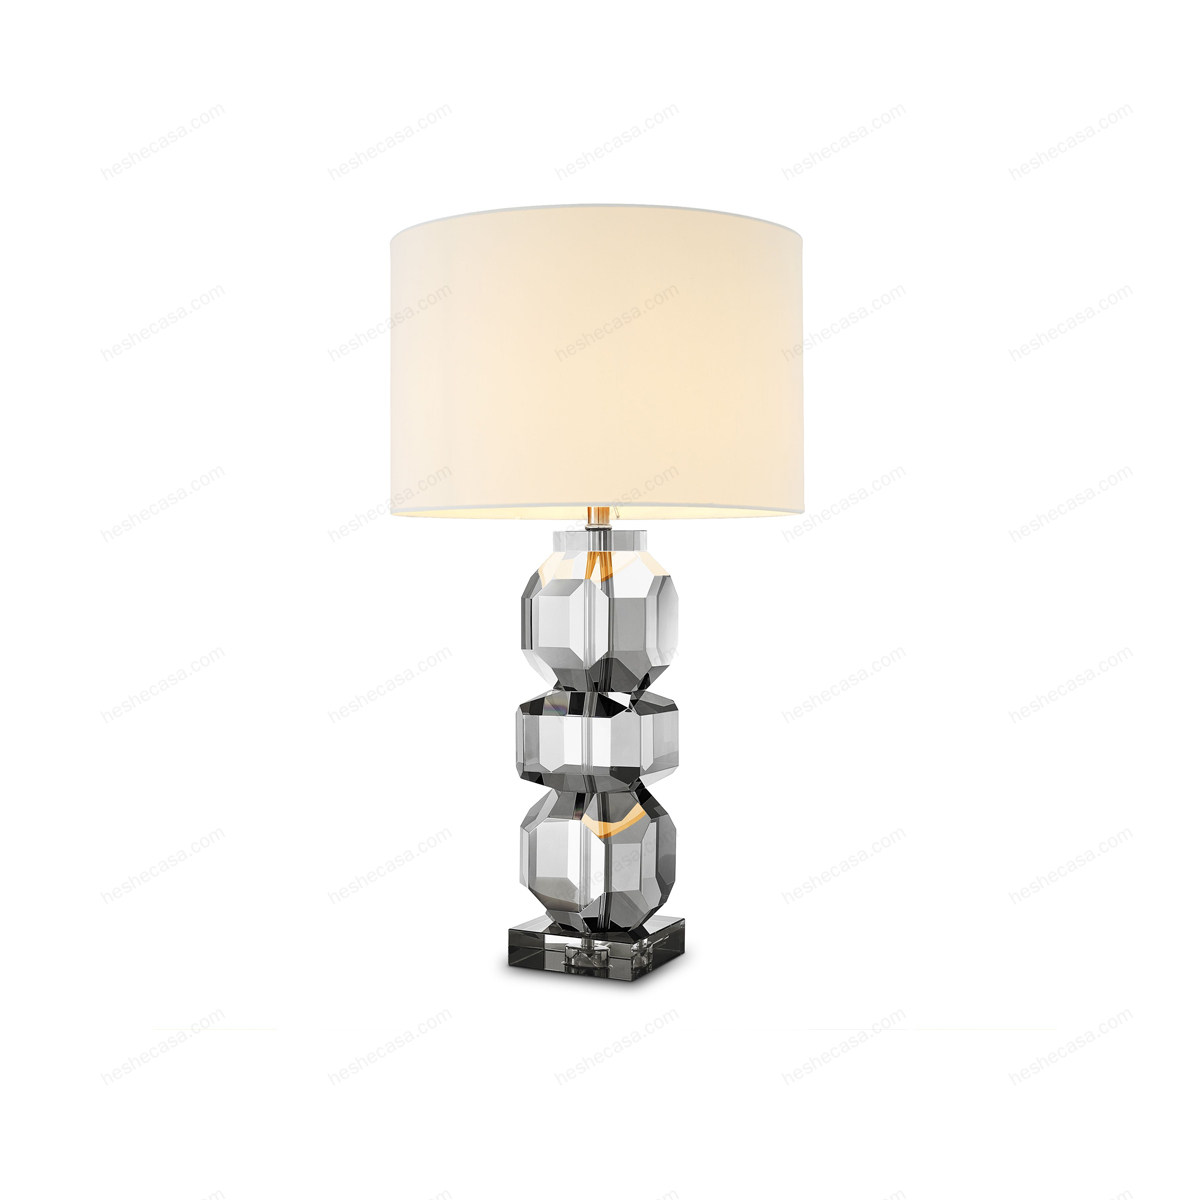 Table Lamp Mornington台灯